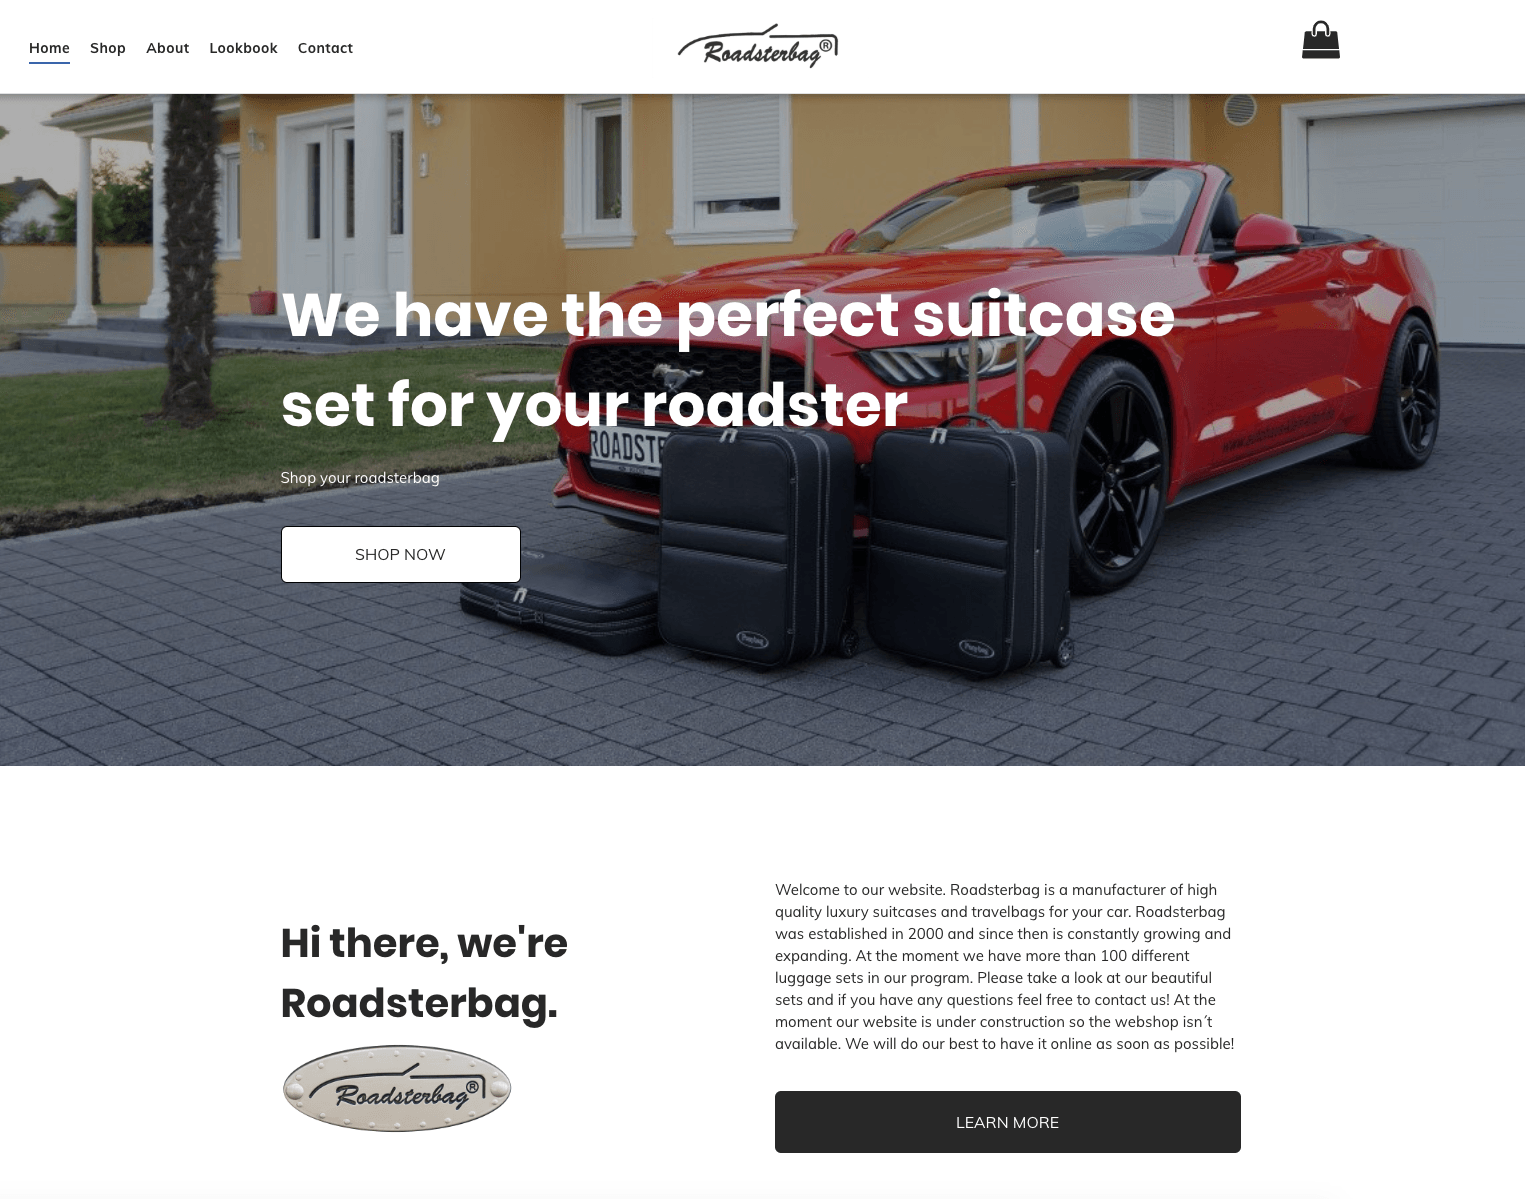 (c) Roadsterbag.com